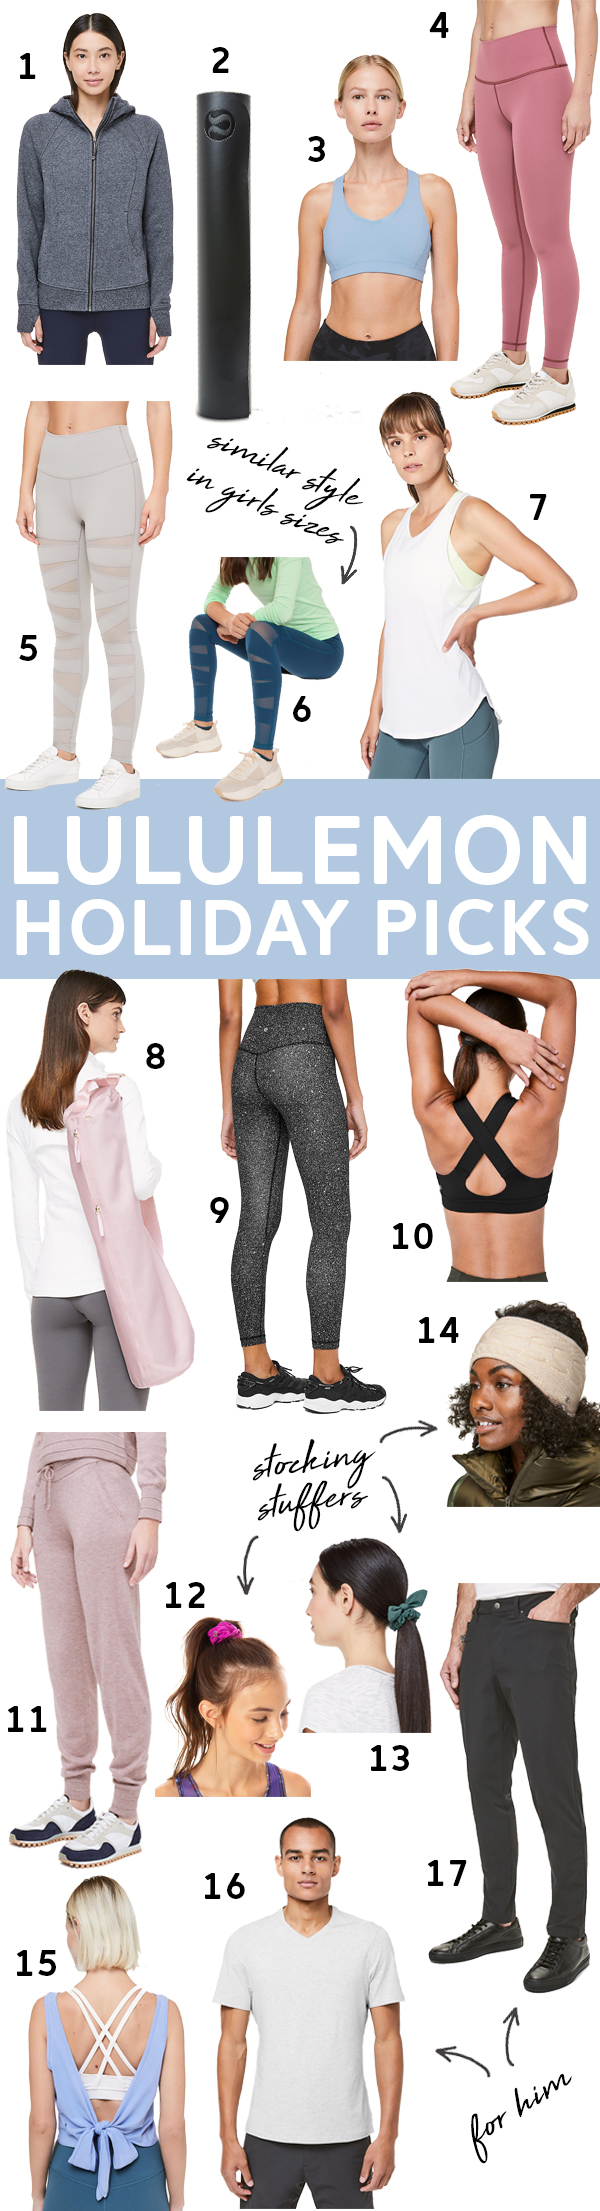 lululemon gift ideas